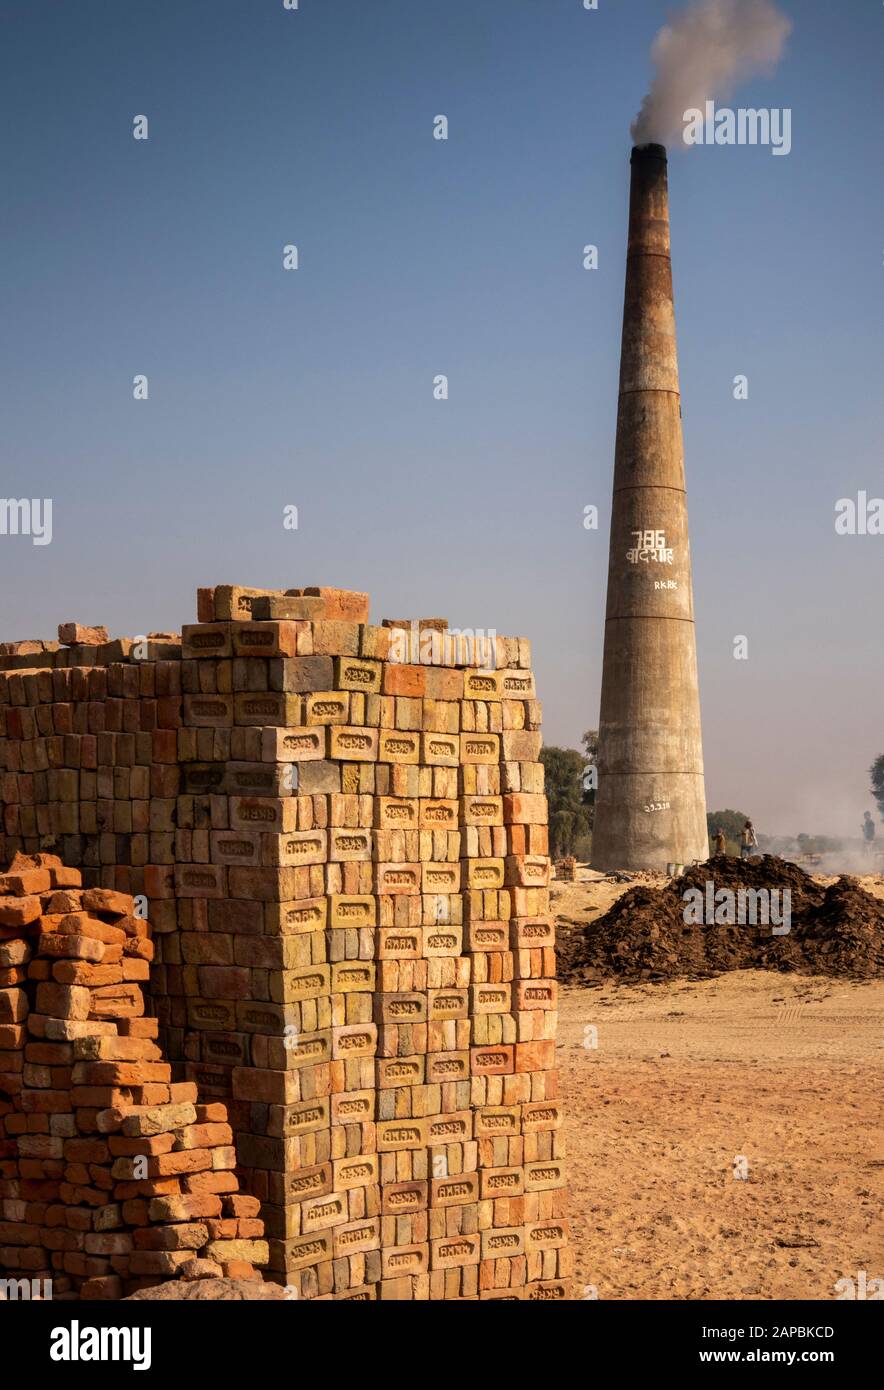 India, Rajasthan, Shekhawati, Bikaner, Gajner, Industry, brickworks, smoking chimney during firing and pile of bricks Stock Photo